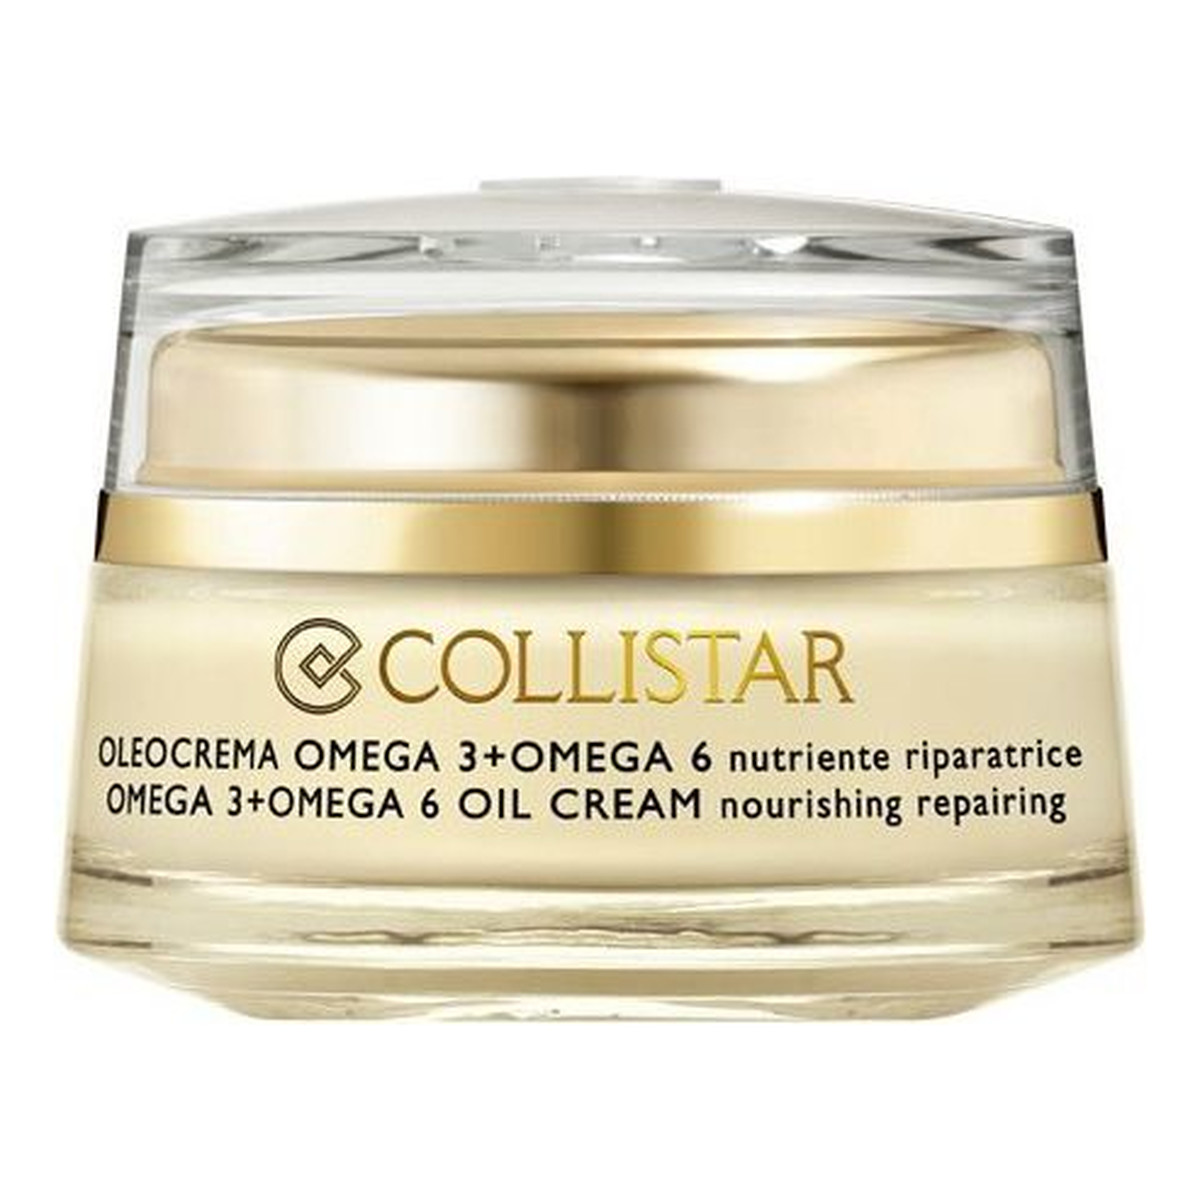 Collistar Attivi Puri Oleocrema Omega 3+ Omega 6 Oil Cream Nourishing Repairing olejkowy krem do twarzy 50ml